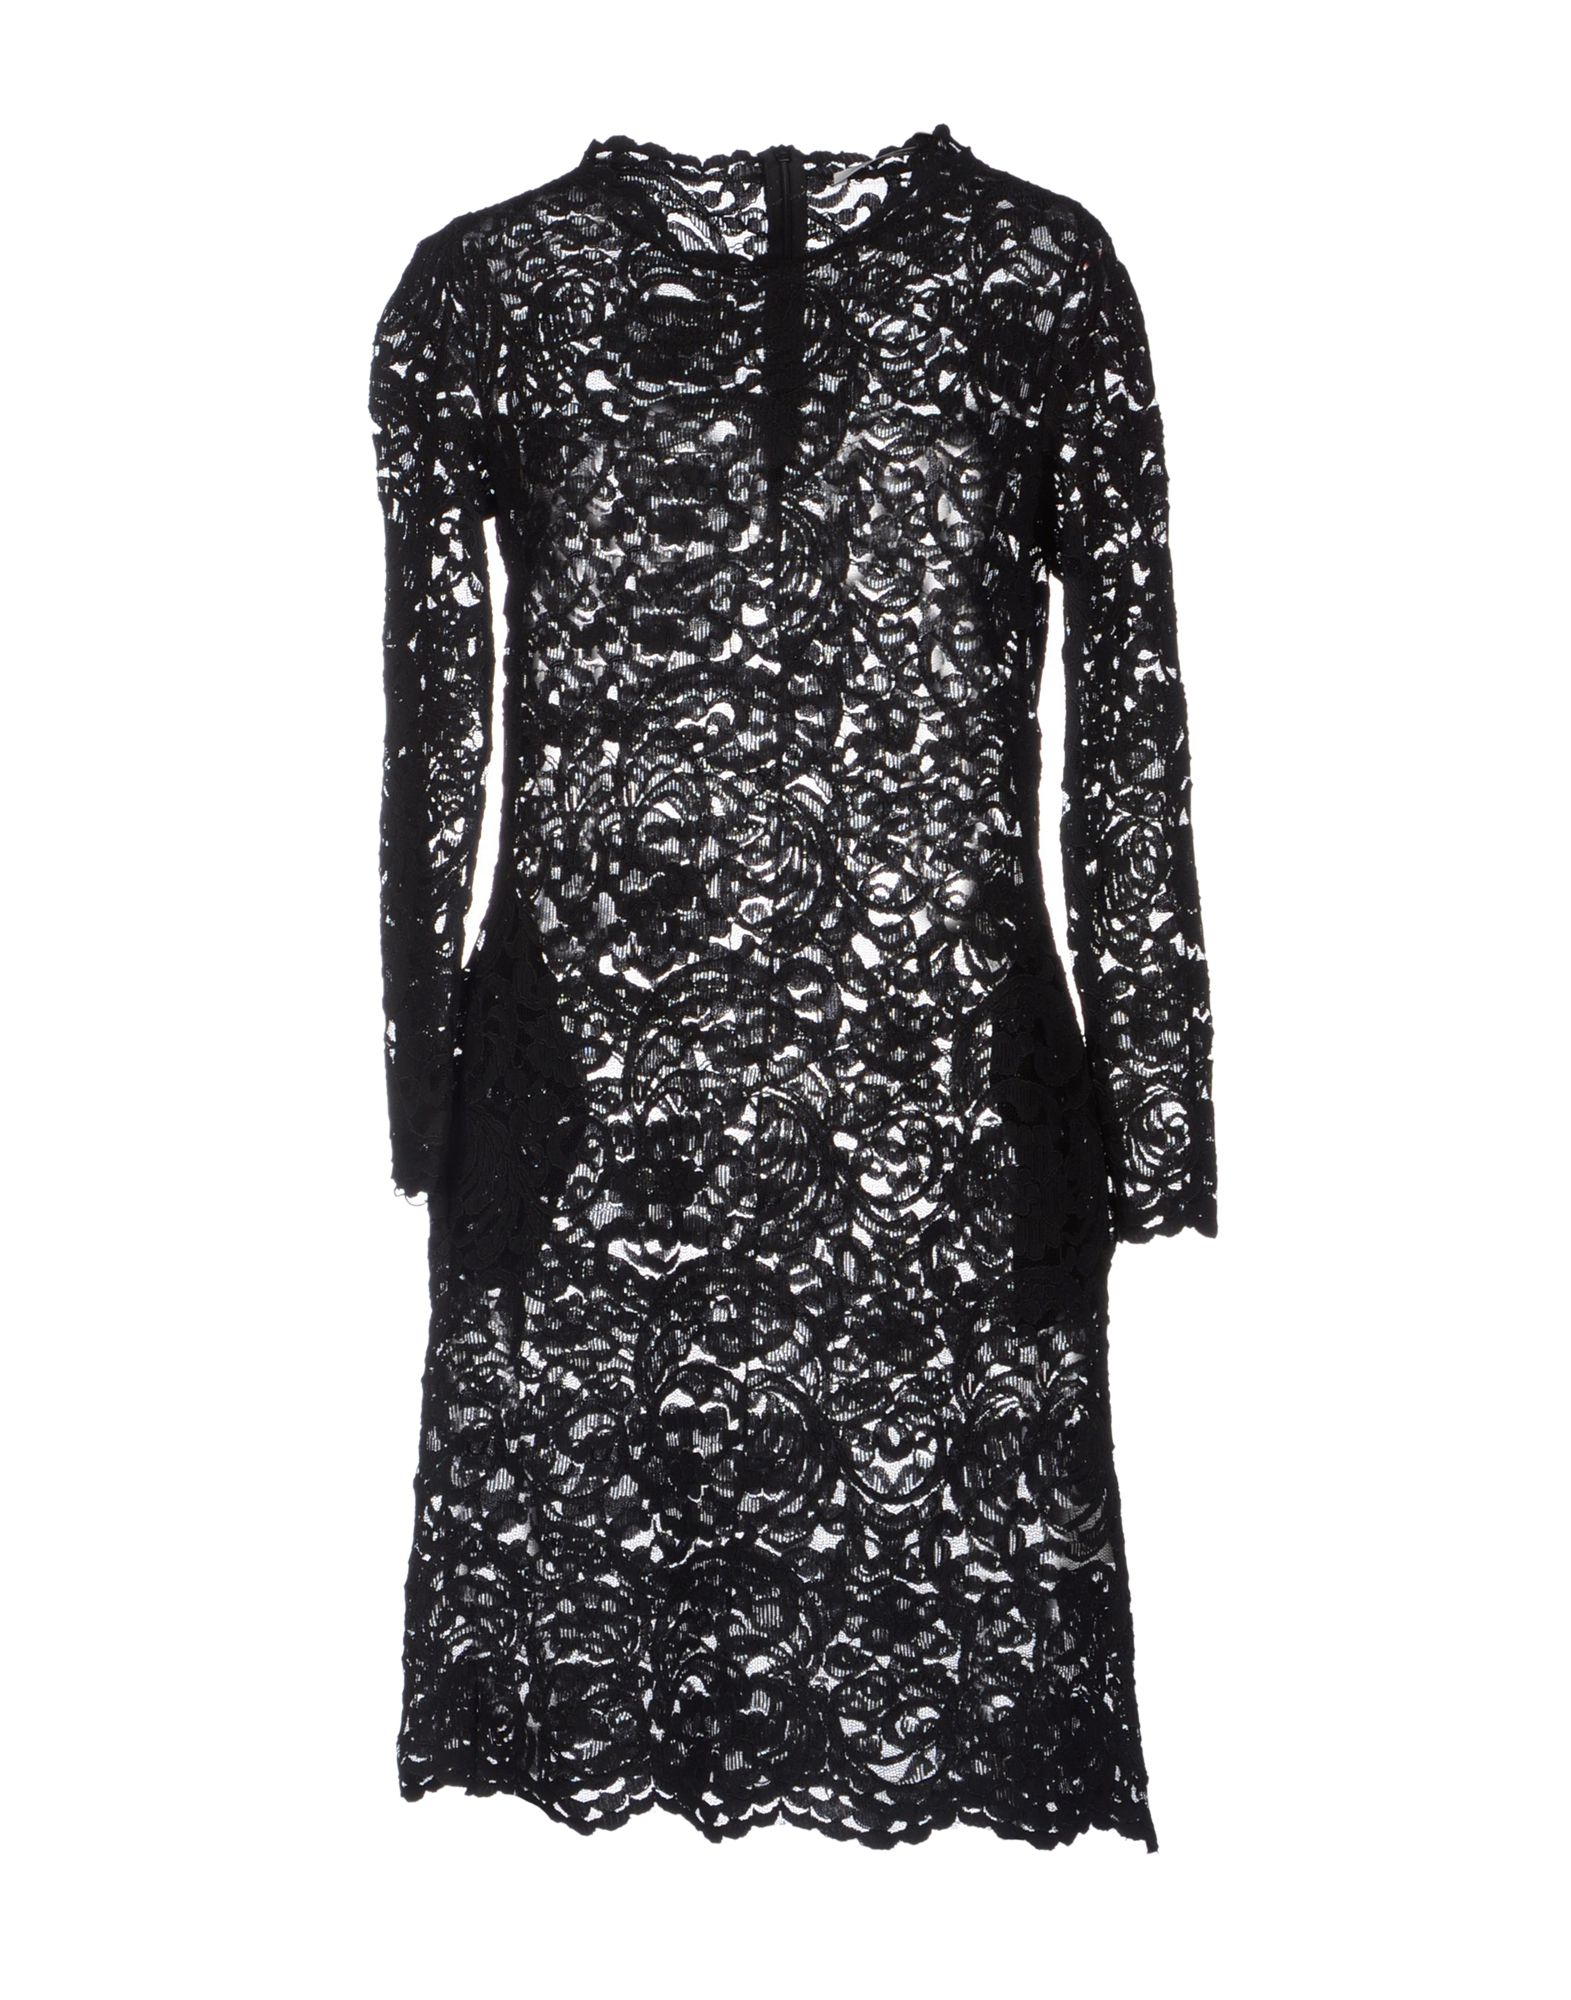 Lyst - Balmain Embellished Fringed Silk Top in Black